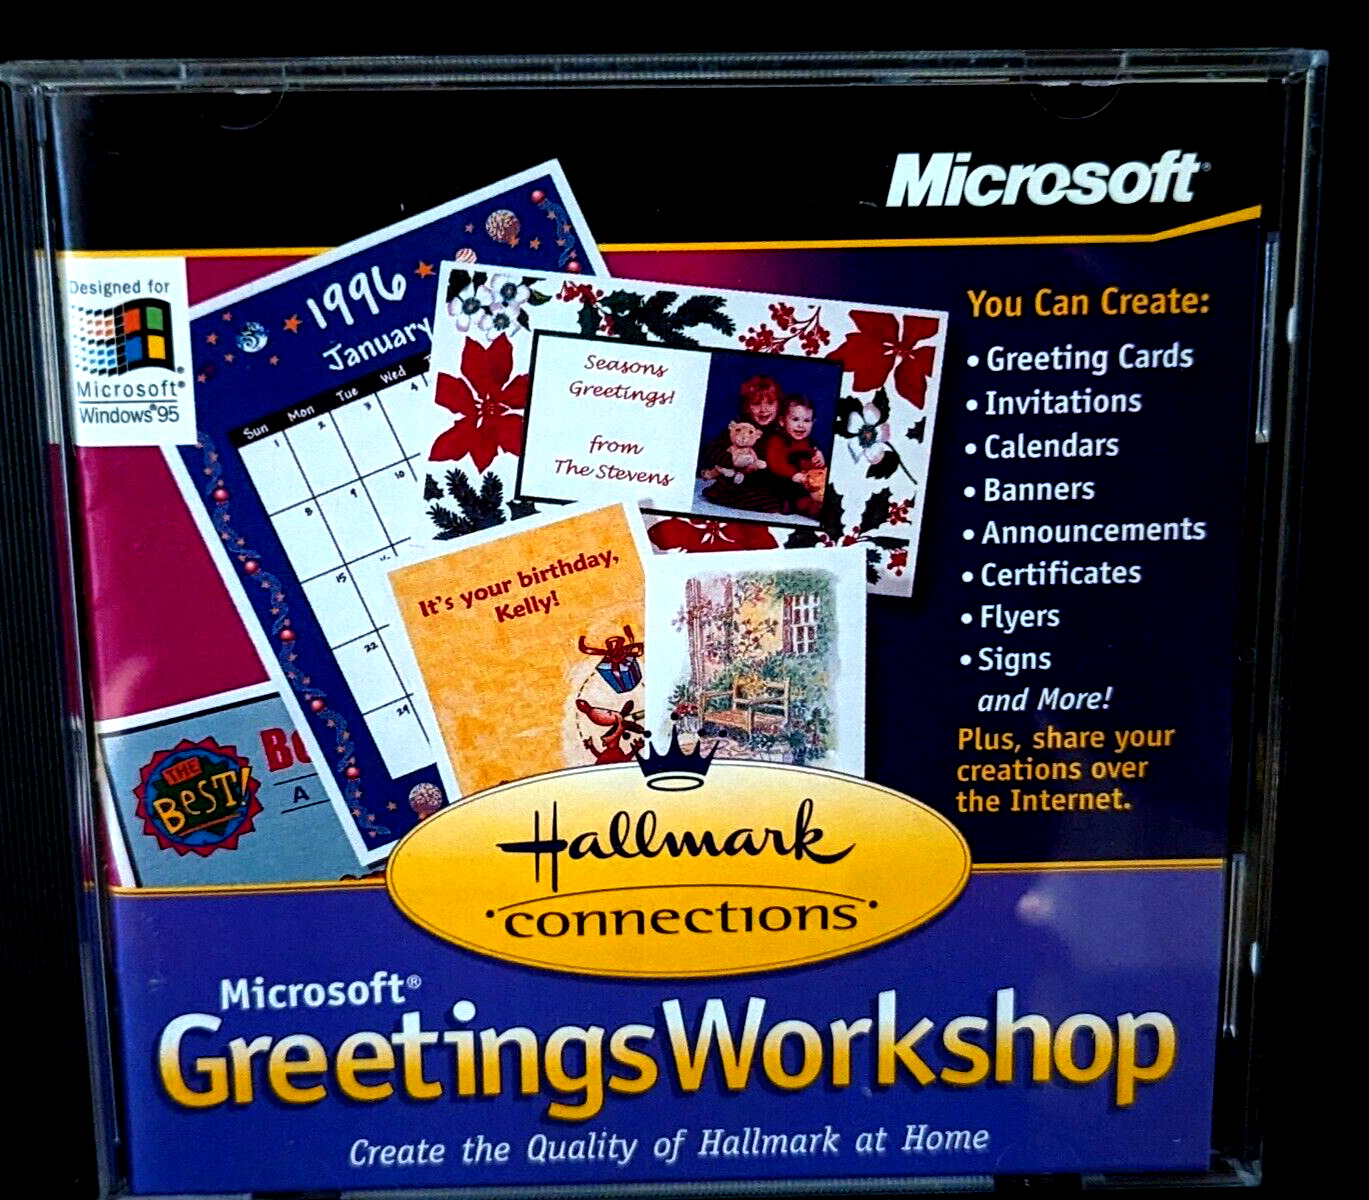 MICROSOFT GREETINGS WORKSHOP - WINDOWS 95, 1996 HALLMARK CONNECTIONS PC CD-ROM